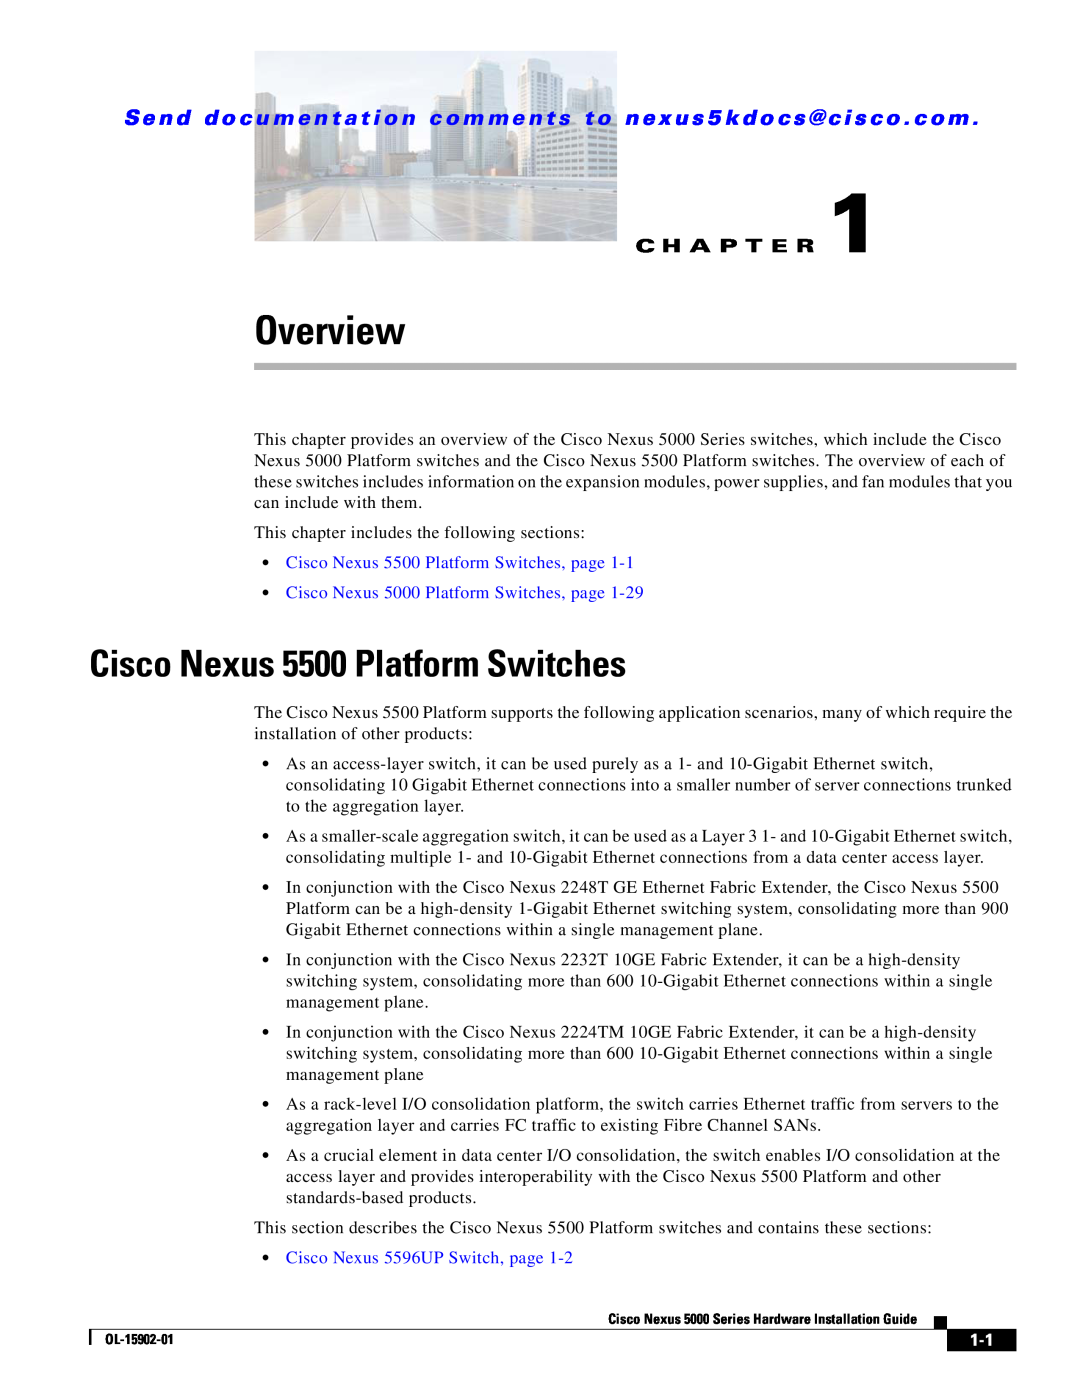 Cisco Systems 5000 Overview, C H A P T E R, Cisco Nexus 5500 Platform Switches, page, Cisco Nexus 5596UP Switch, page 